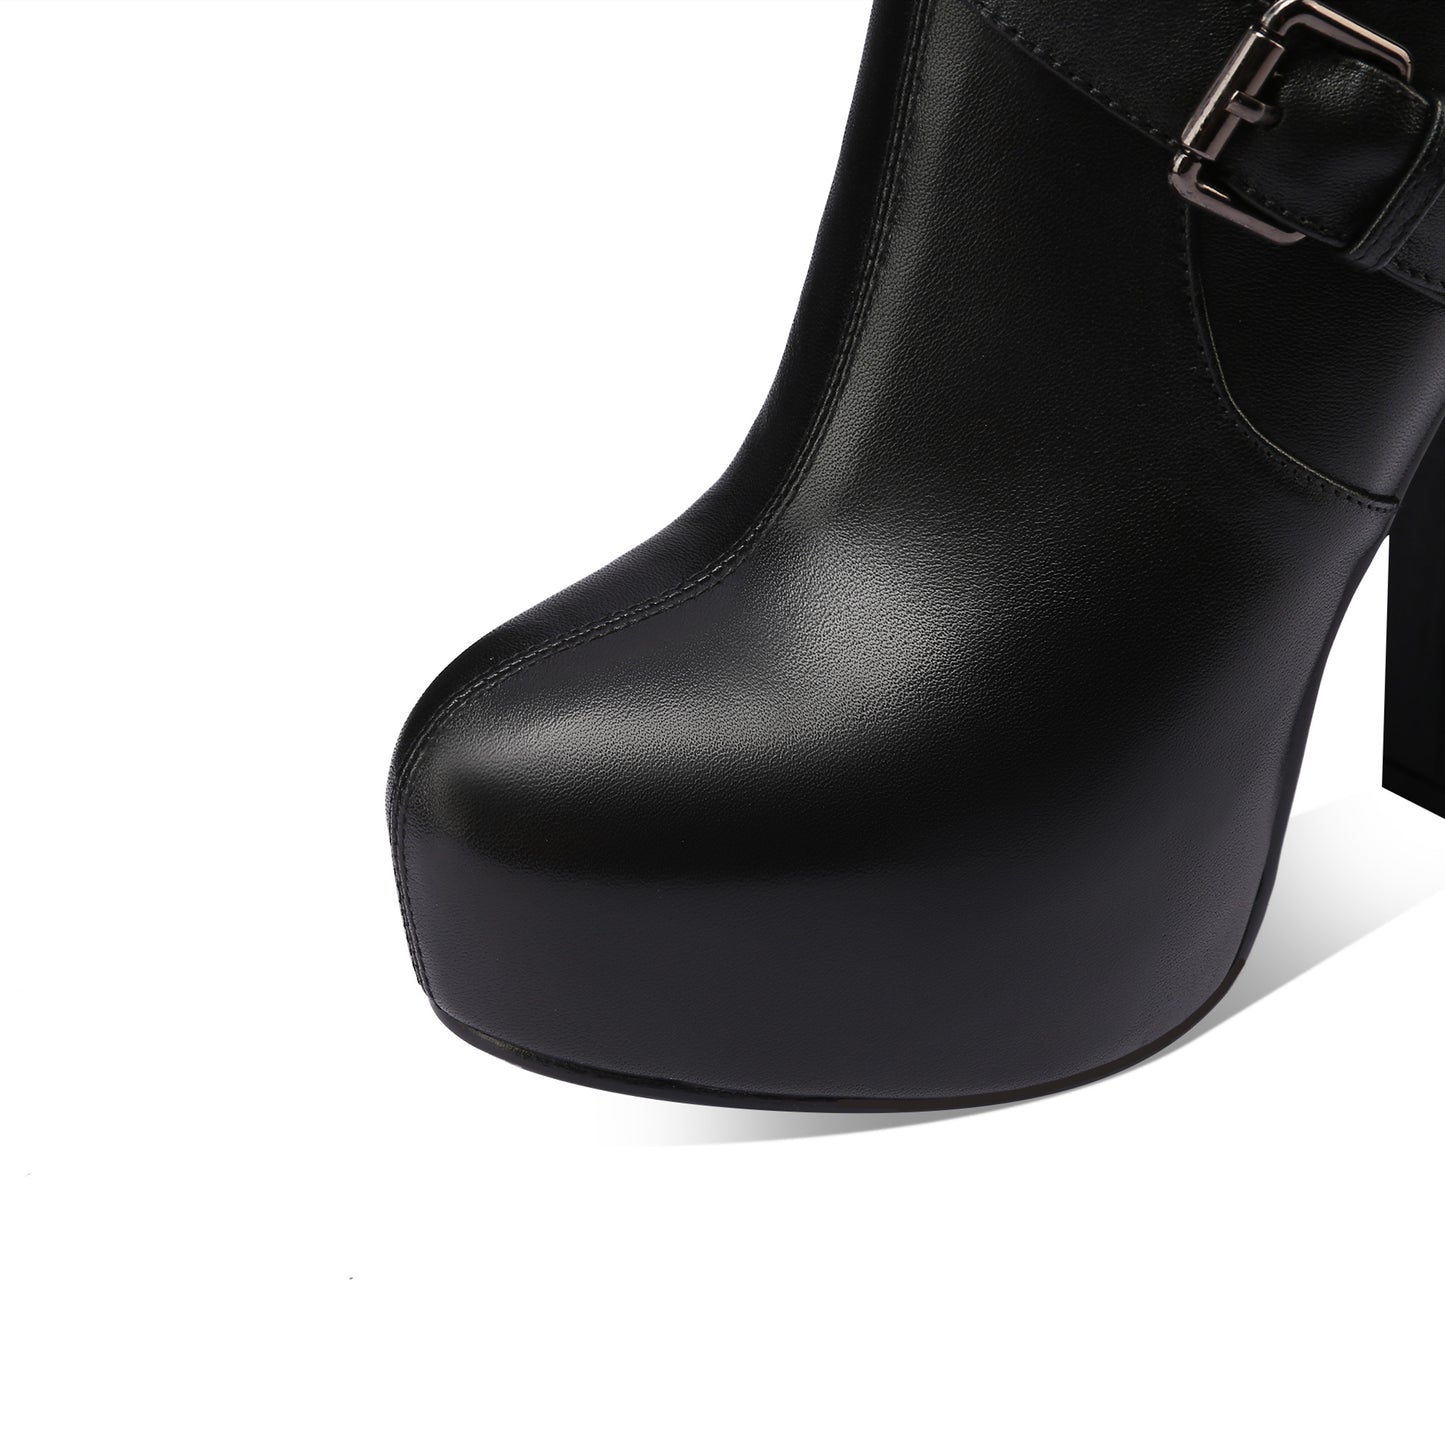 TinaCus Handmade Women's Genuine Leather Buckle Strap Round Toe Sexy High Heel Platform Fashion Boots